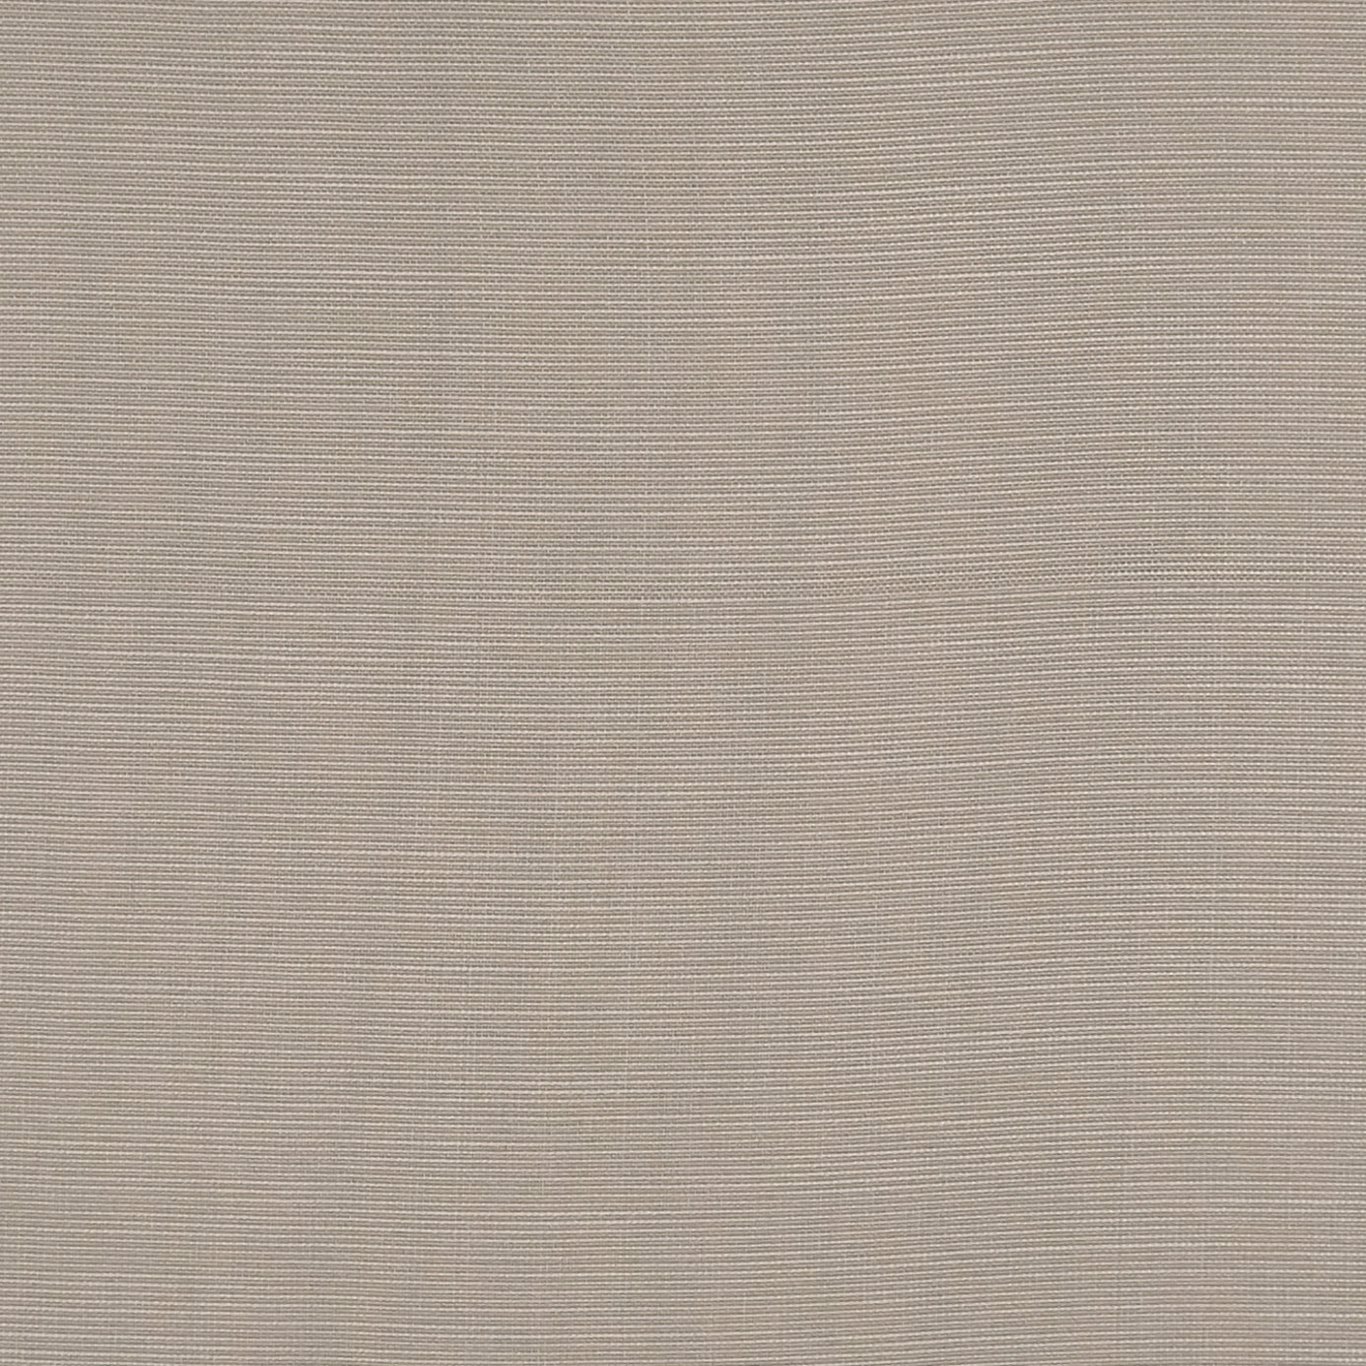 Terra Blush Fabric by CNC